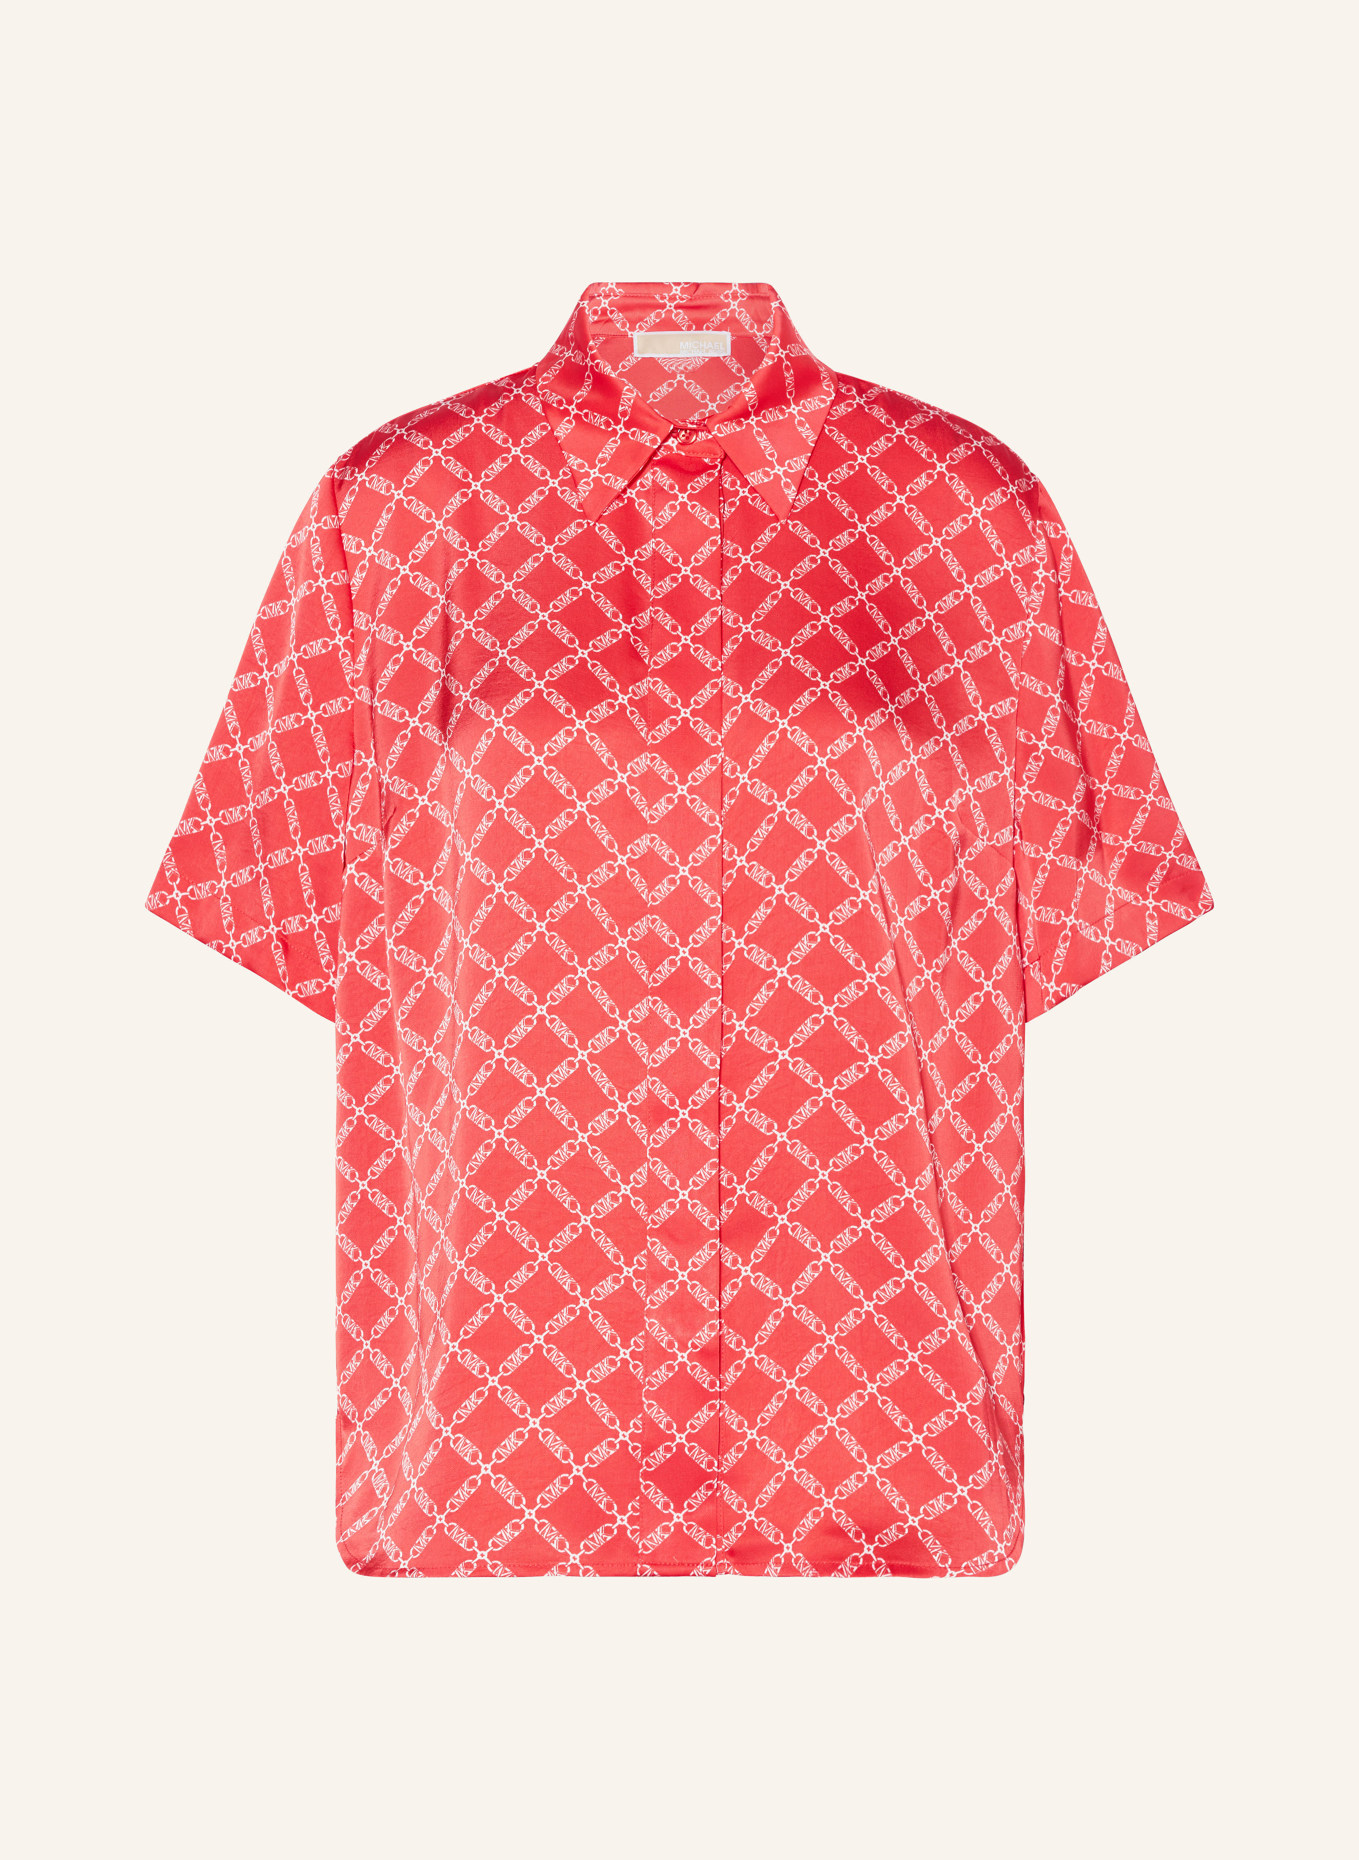 MICHAEL KORS Hemdbluse aus Satin, Farbe: ROT/ WEISS (Bild 1)